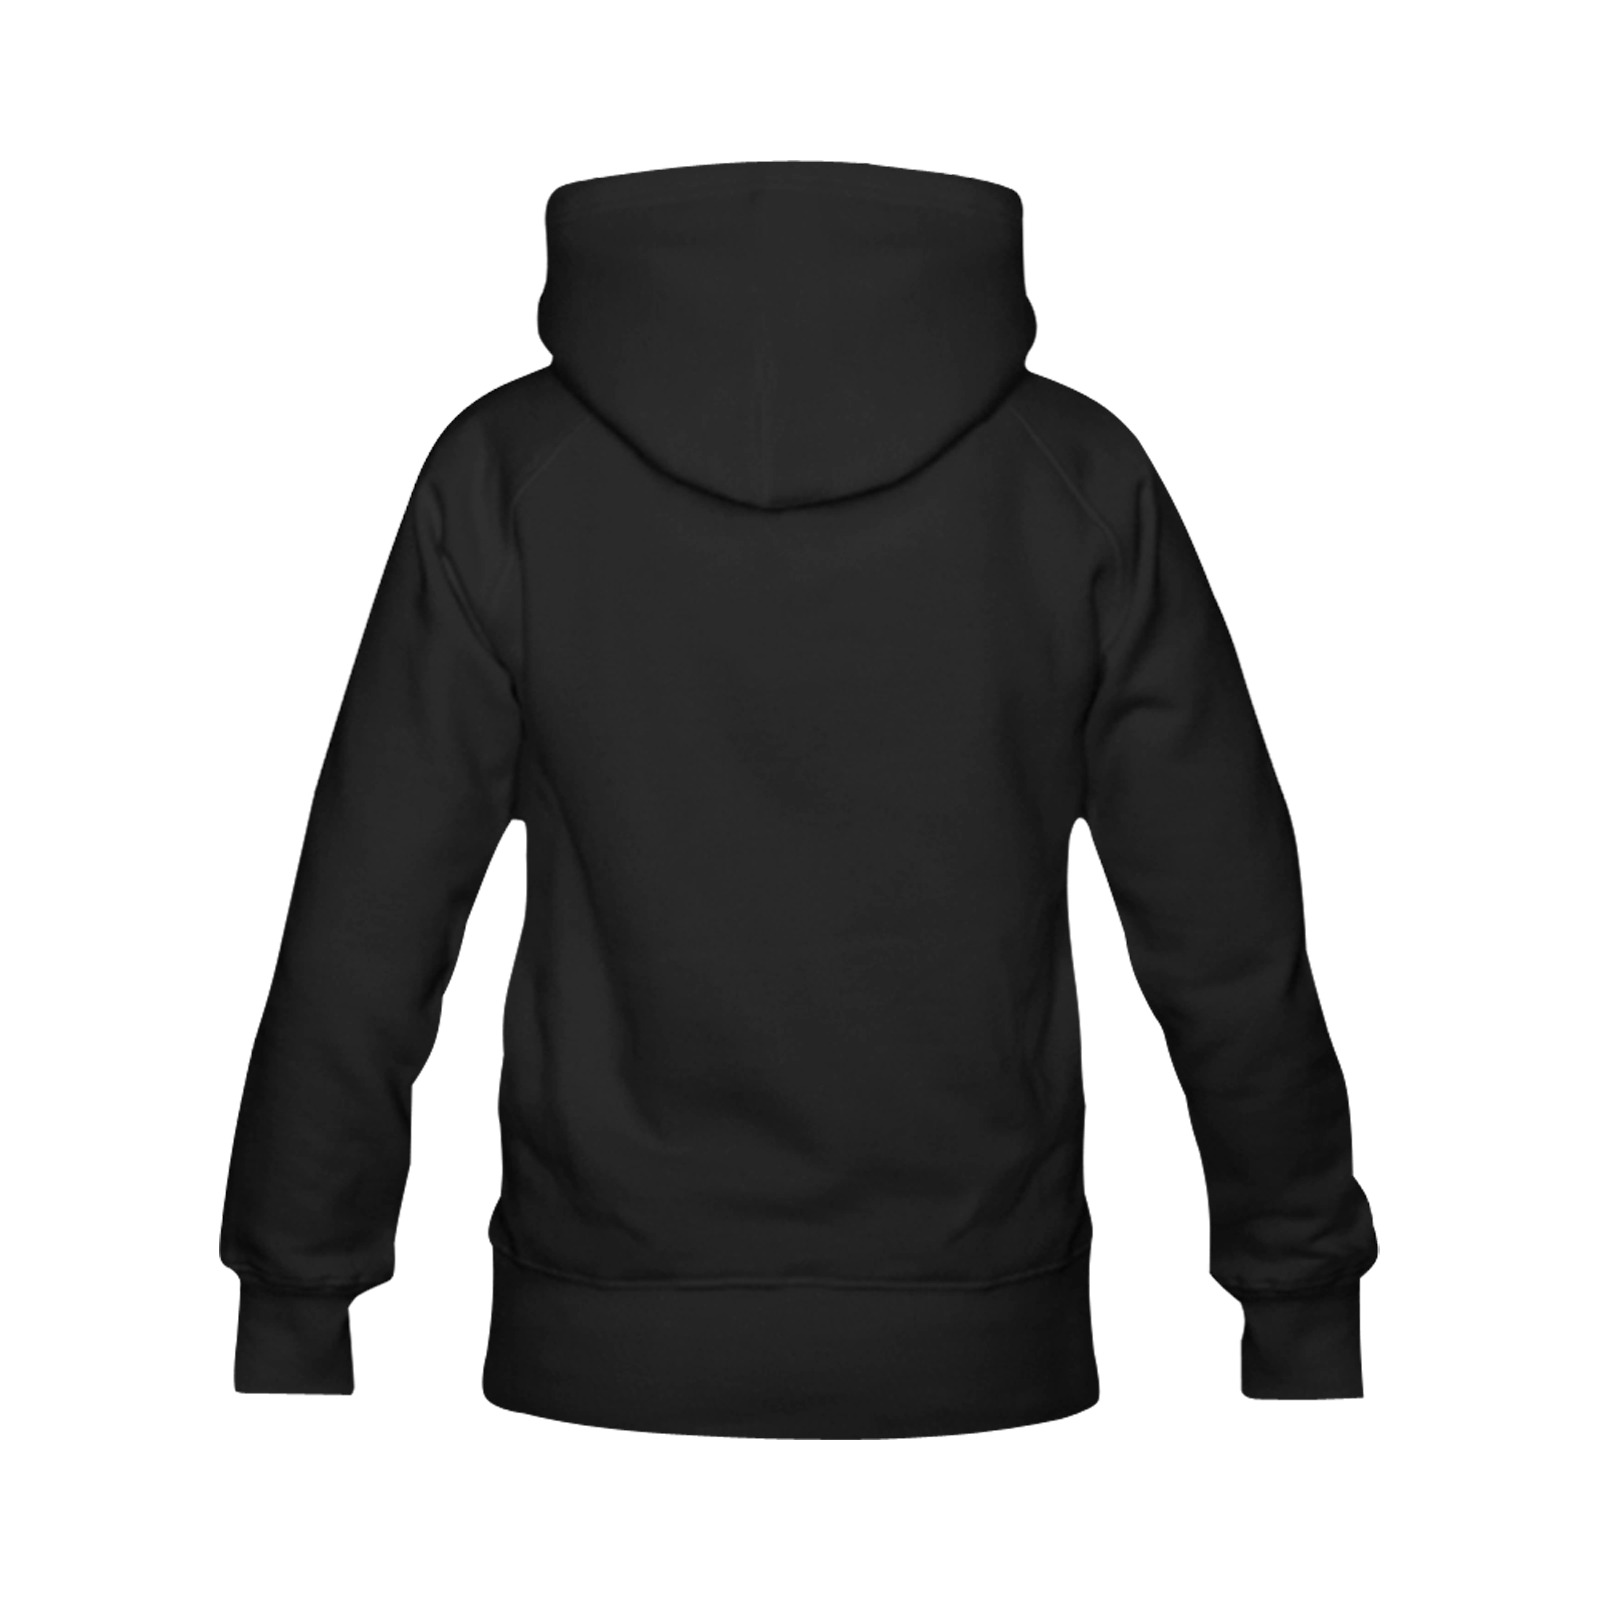 Las Vegas Dice on Black Heavy Blend Hooded Sweatshirt